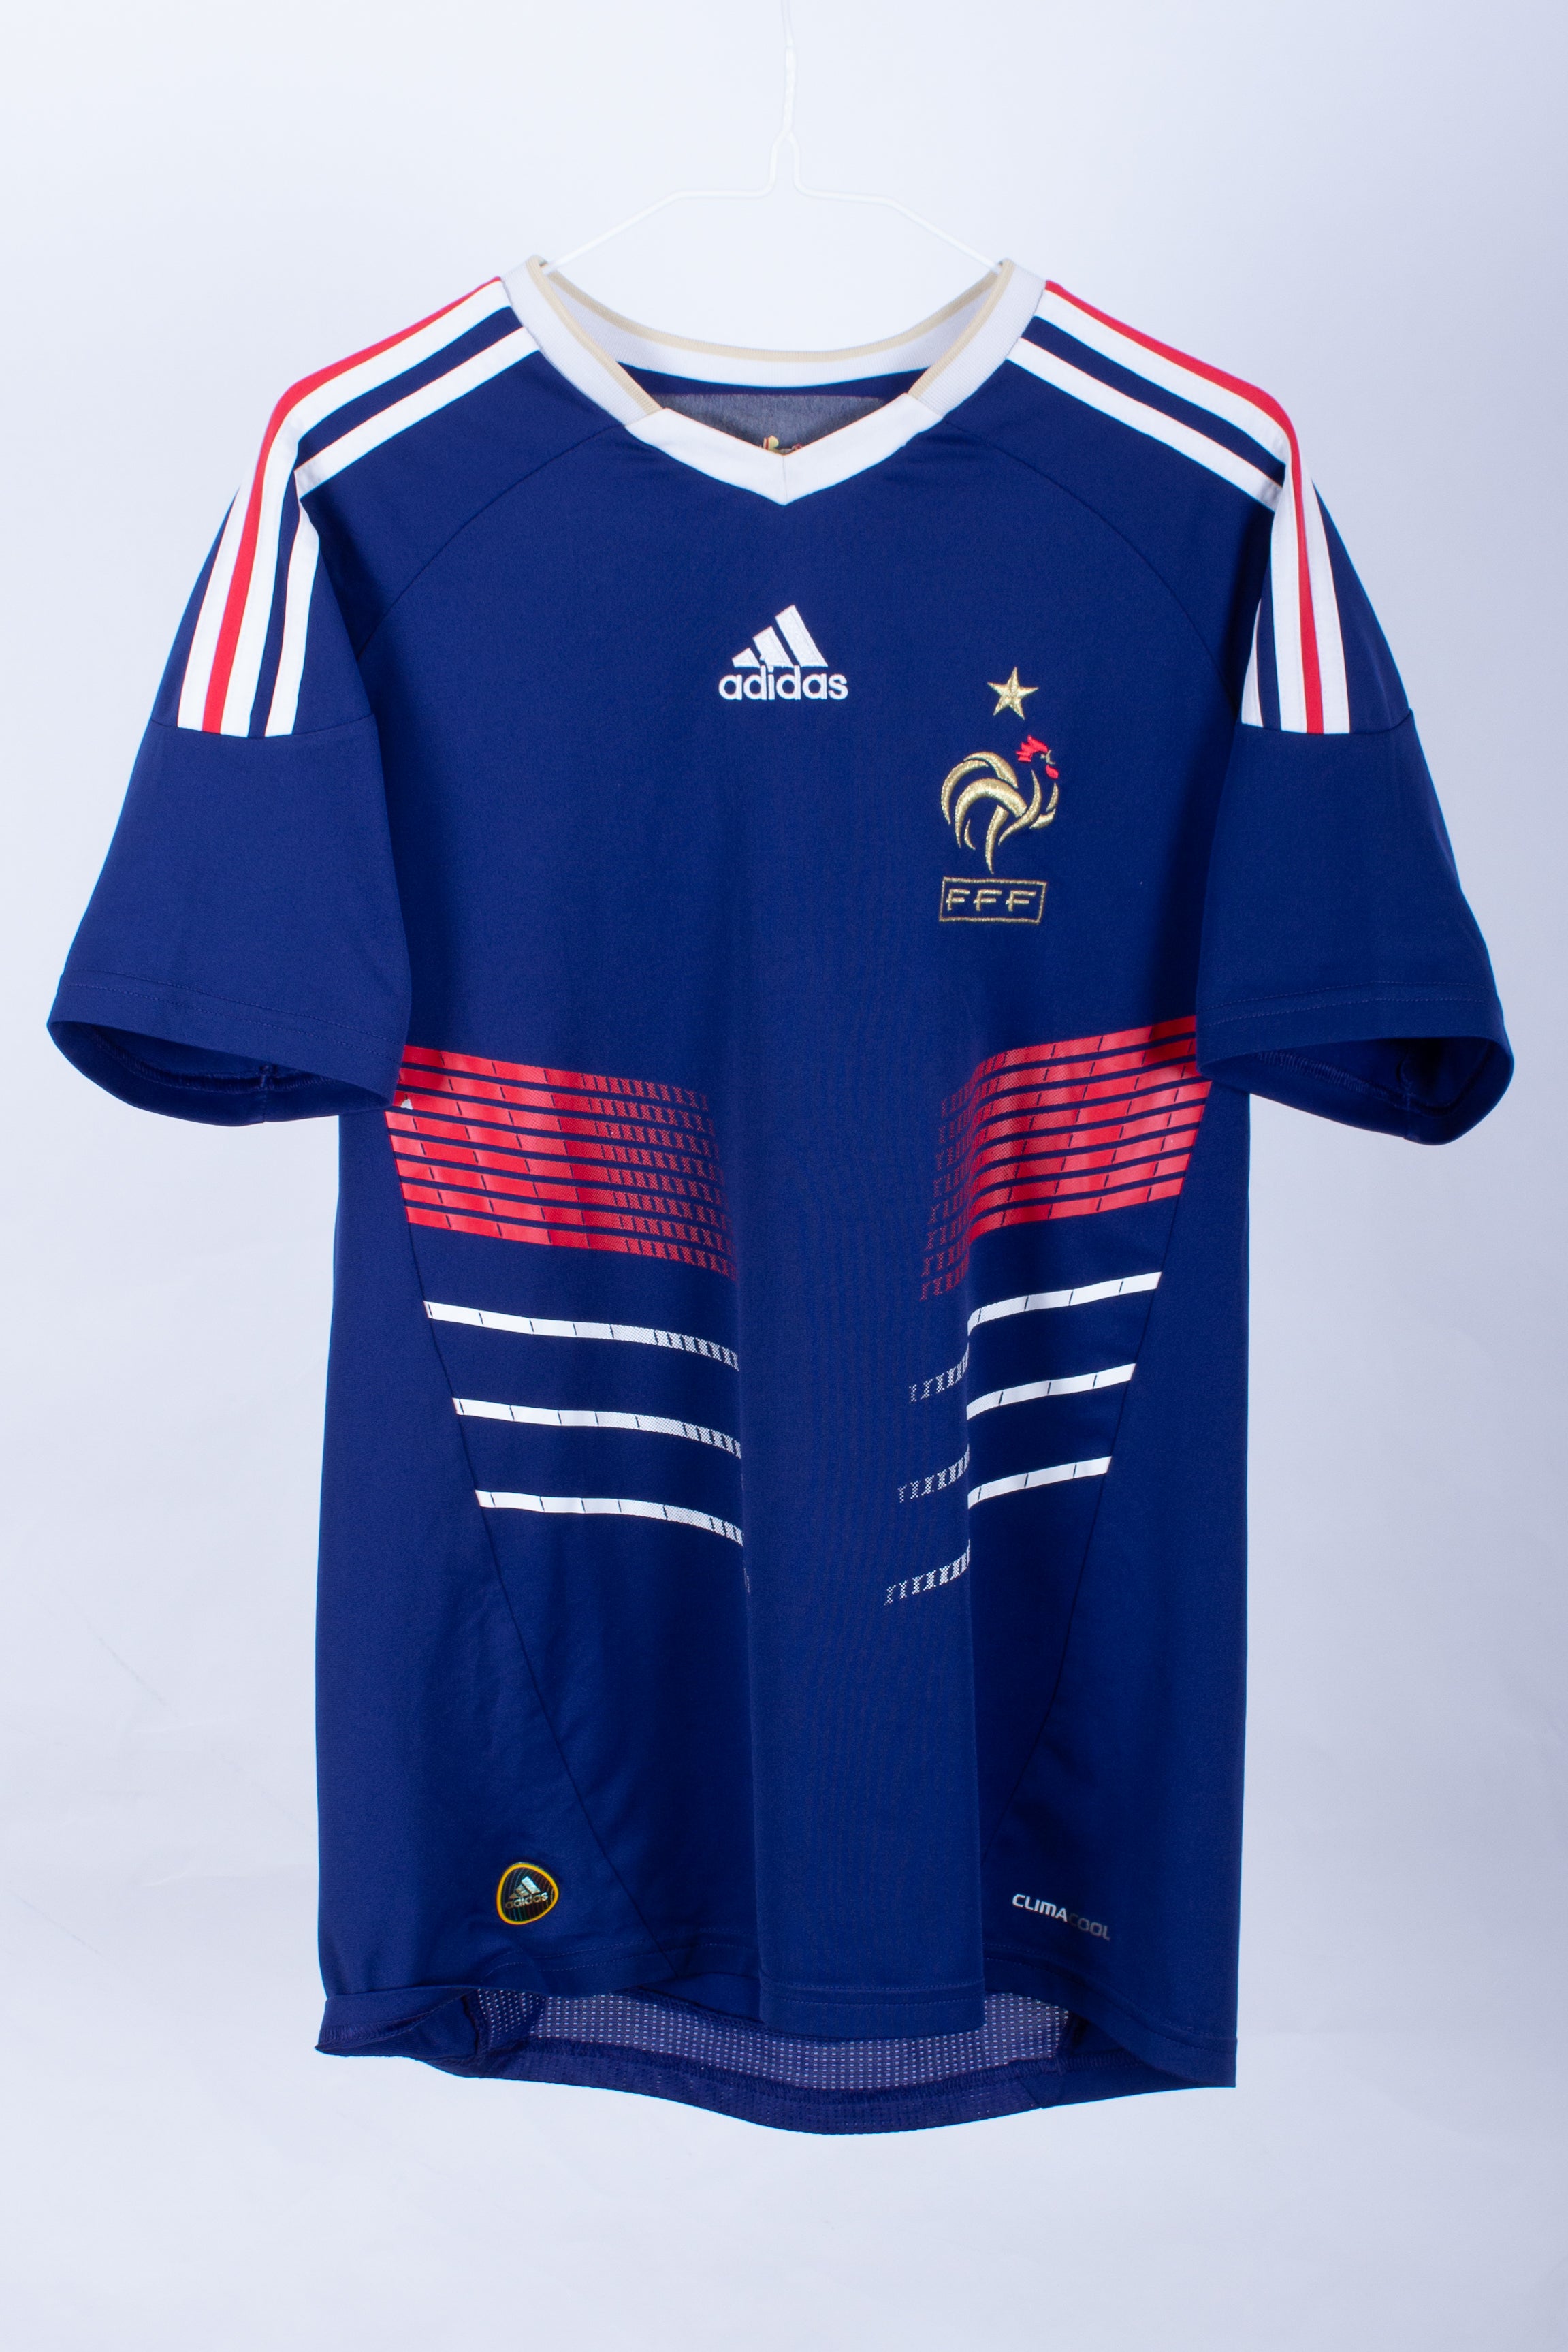 Kids France 2010 Home Shirt (Ribery #7)